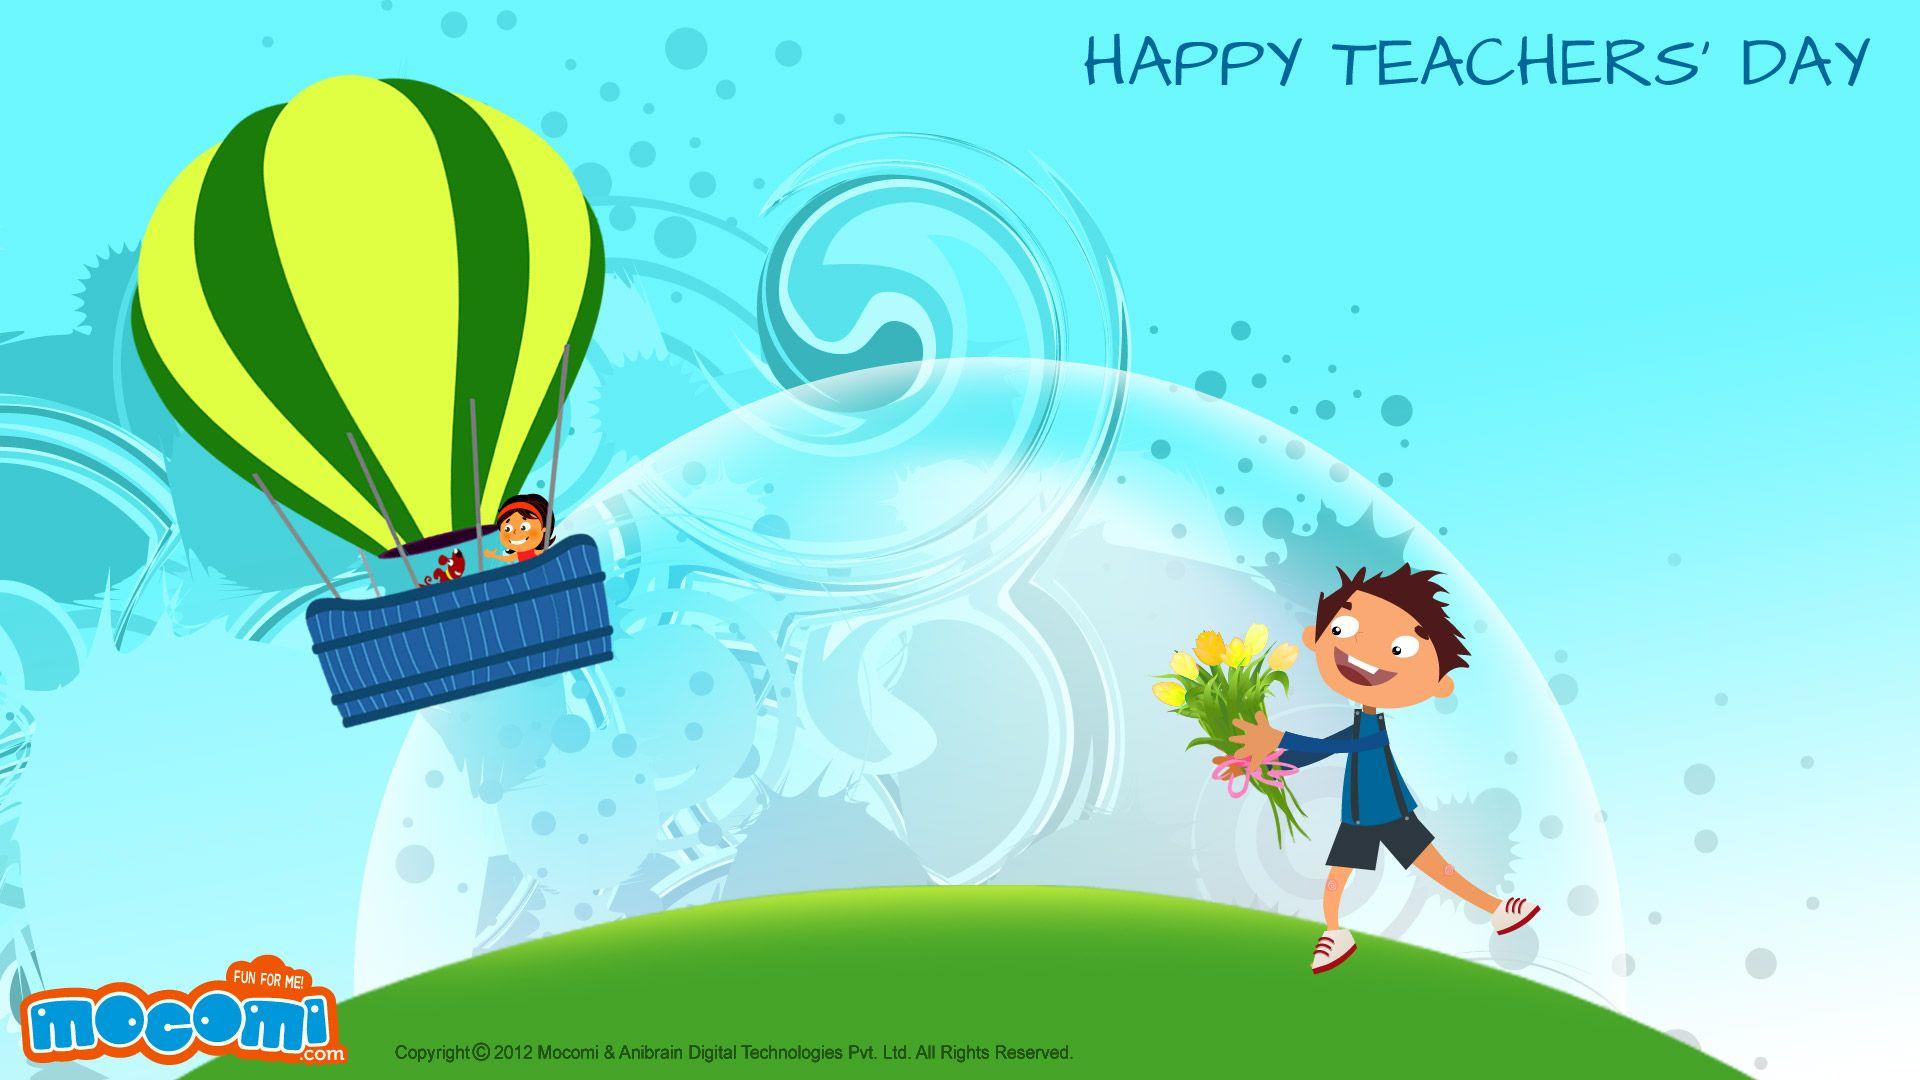 Happy Teachers' Day! 02 Wallpaper for Kids. Kids